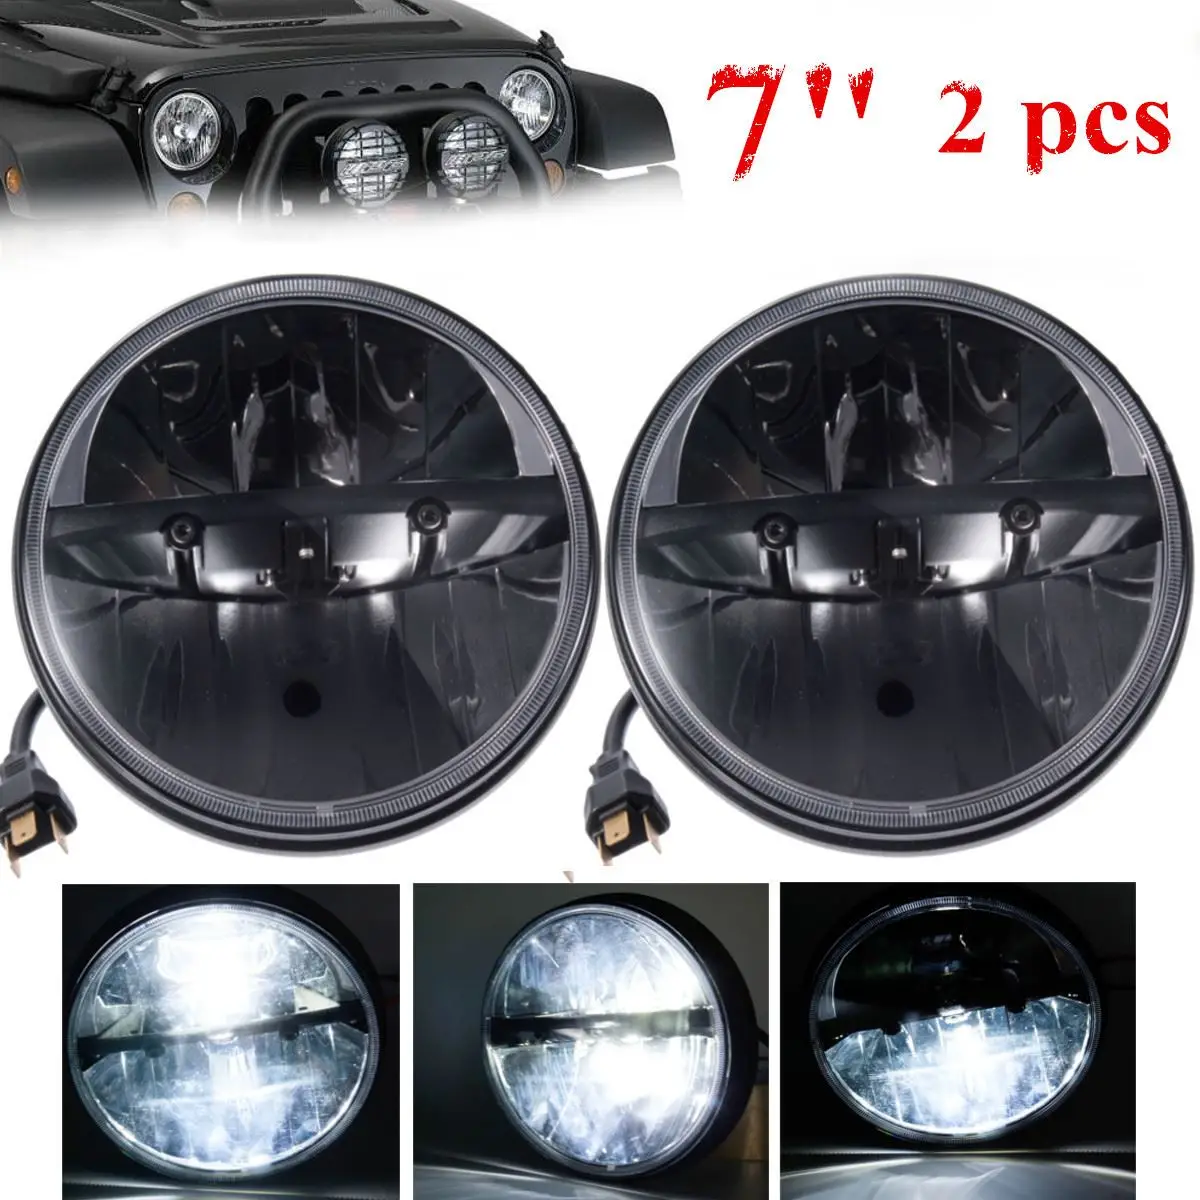 2Pcs 7 Inch Round Headlight Led For Jeep/Wrangler 97-15 Hummer LED Hi/Lo Beam Headlamp For CJ TJ JK